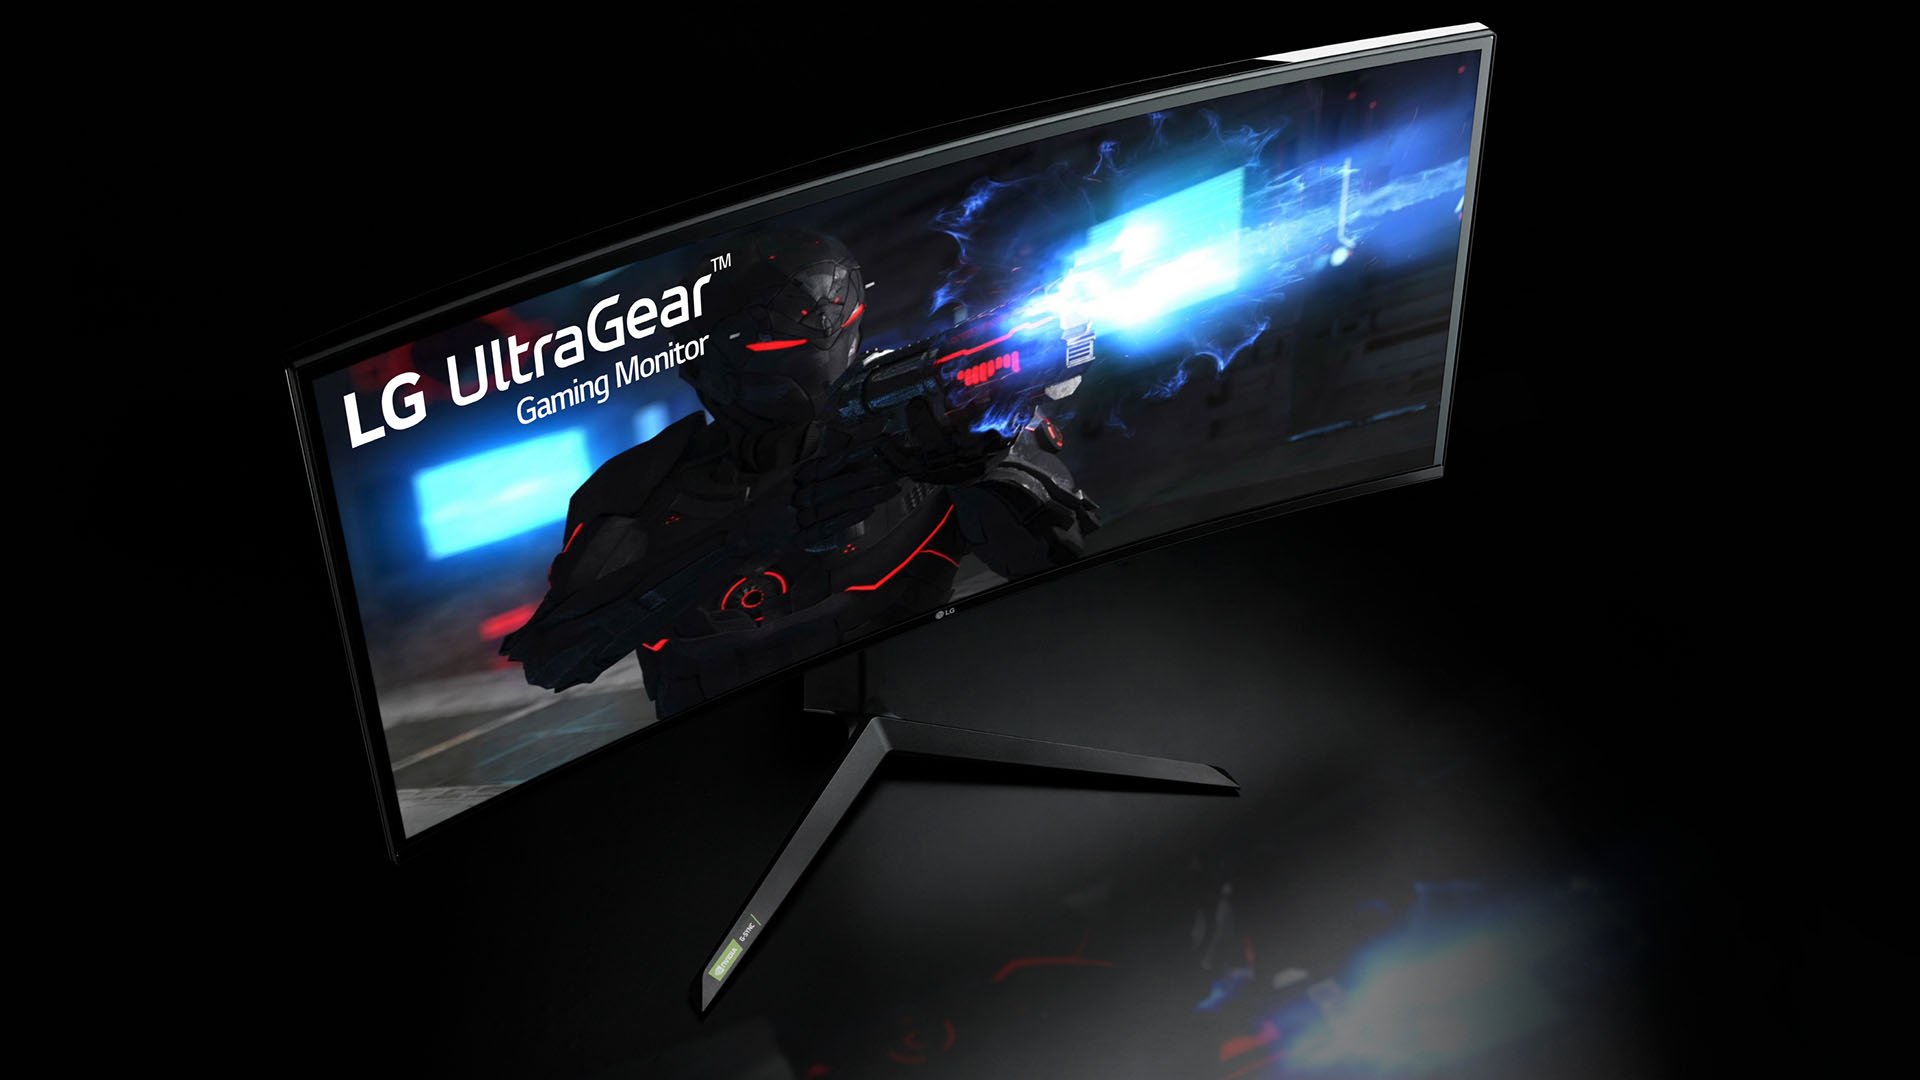 LG UltraGear 34GN850